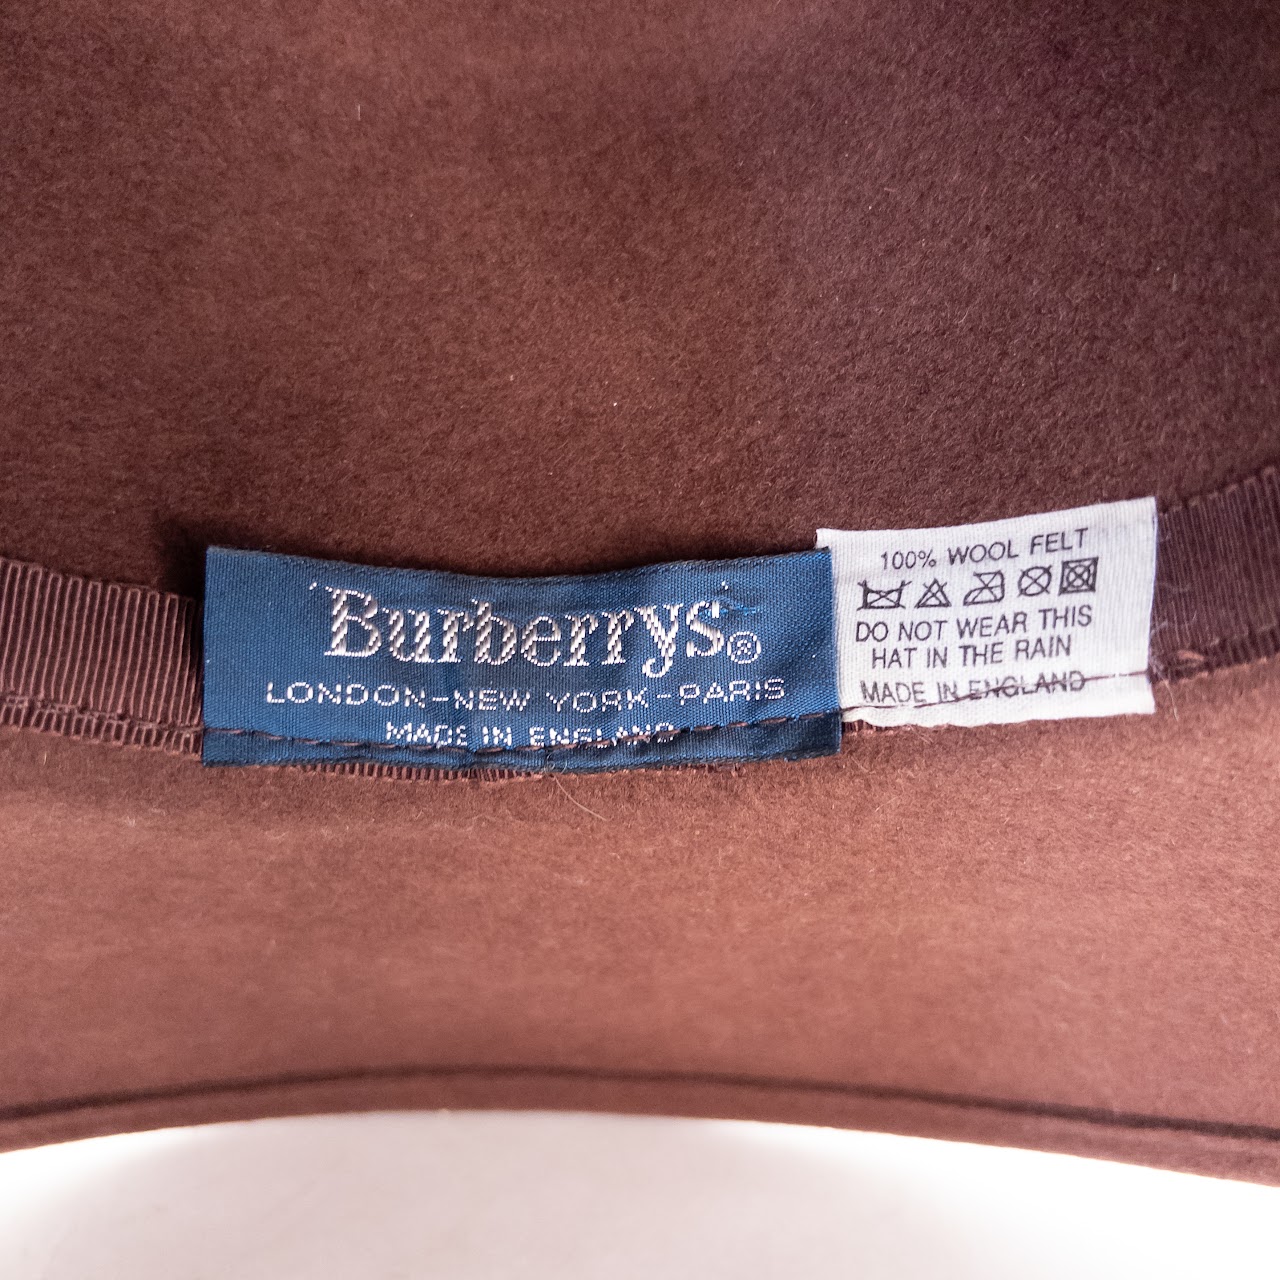 Burberry's Wide Brimmed Felt Hat